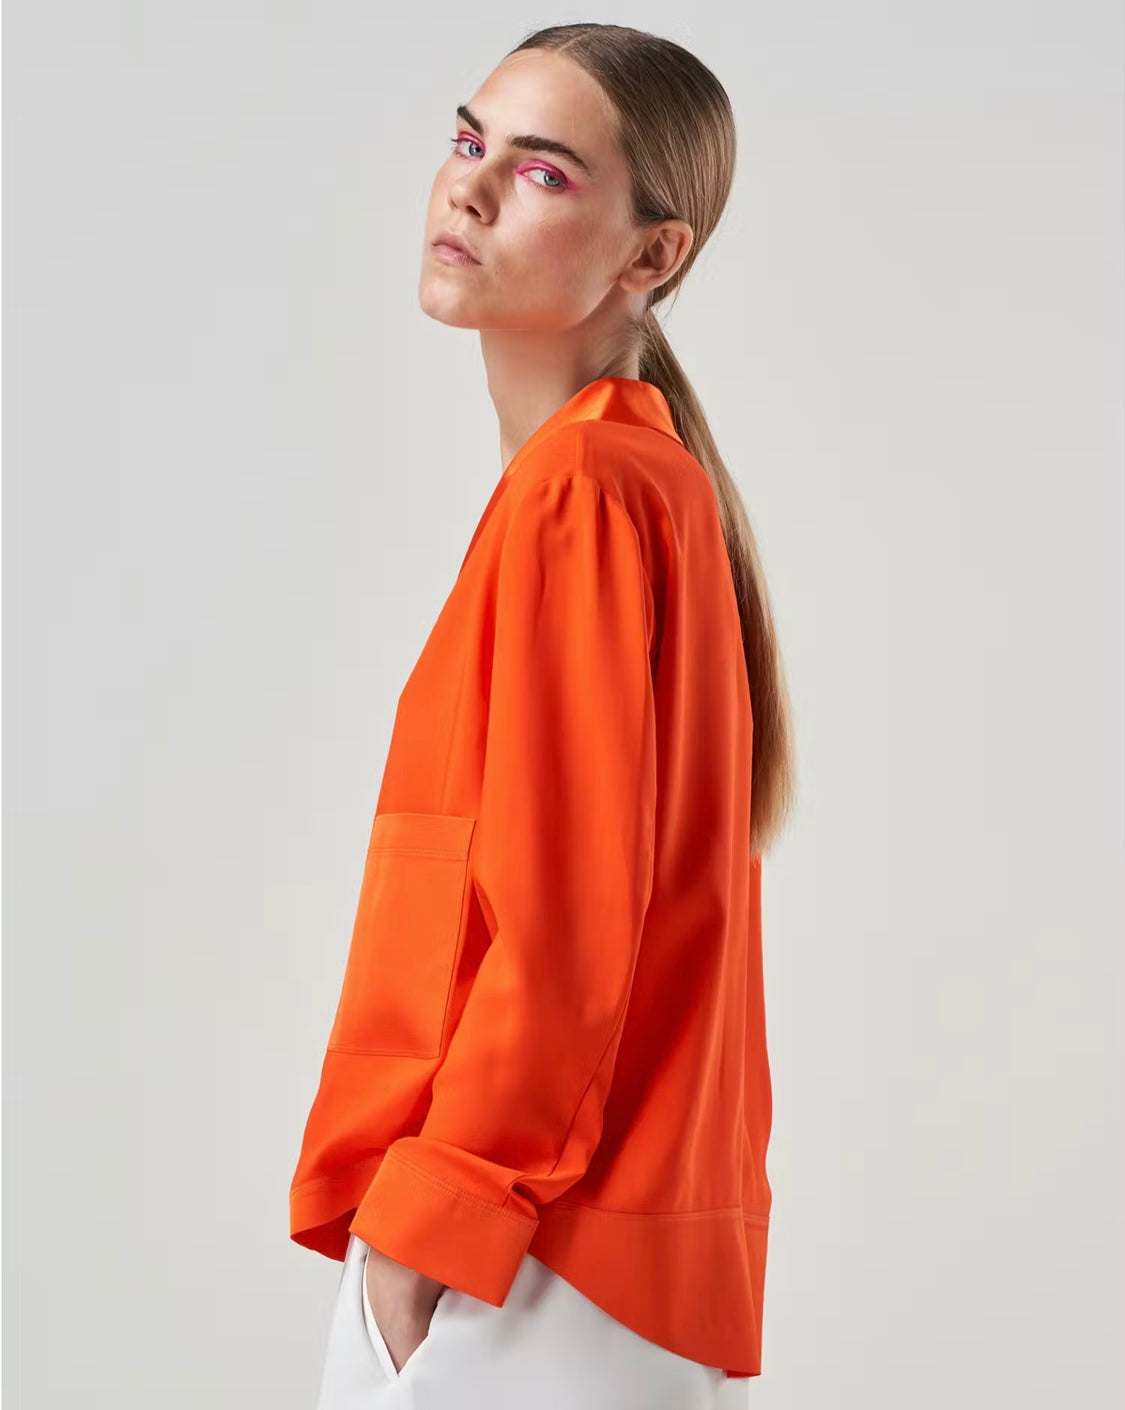 Uptodate Unstructured Shirt Jacket Orange